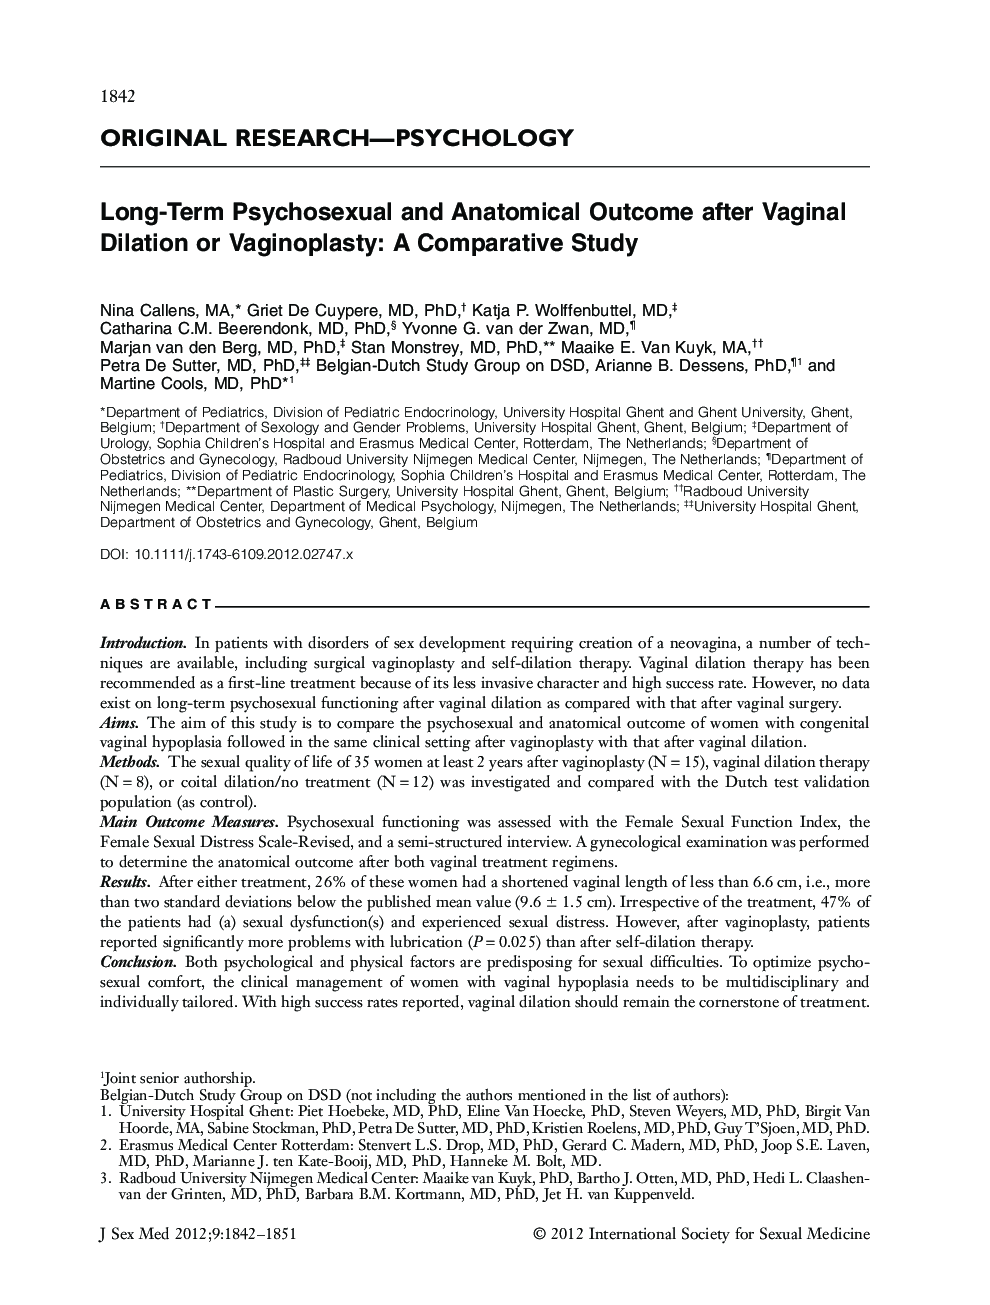 LongâTerm Psychosexual and Anatomical Outcome after Vaginal Dilation or Vaginoplasty: A Comparative Study